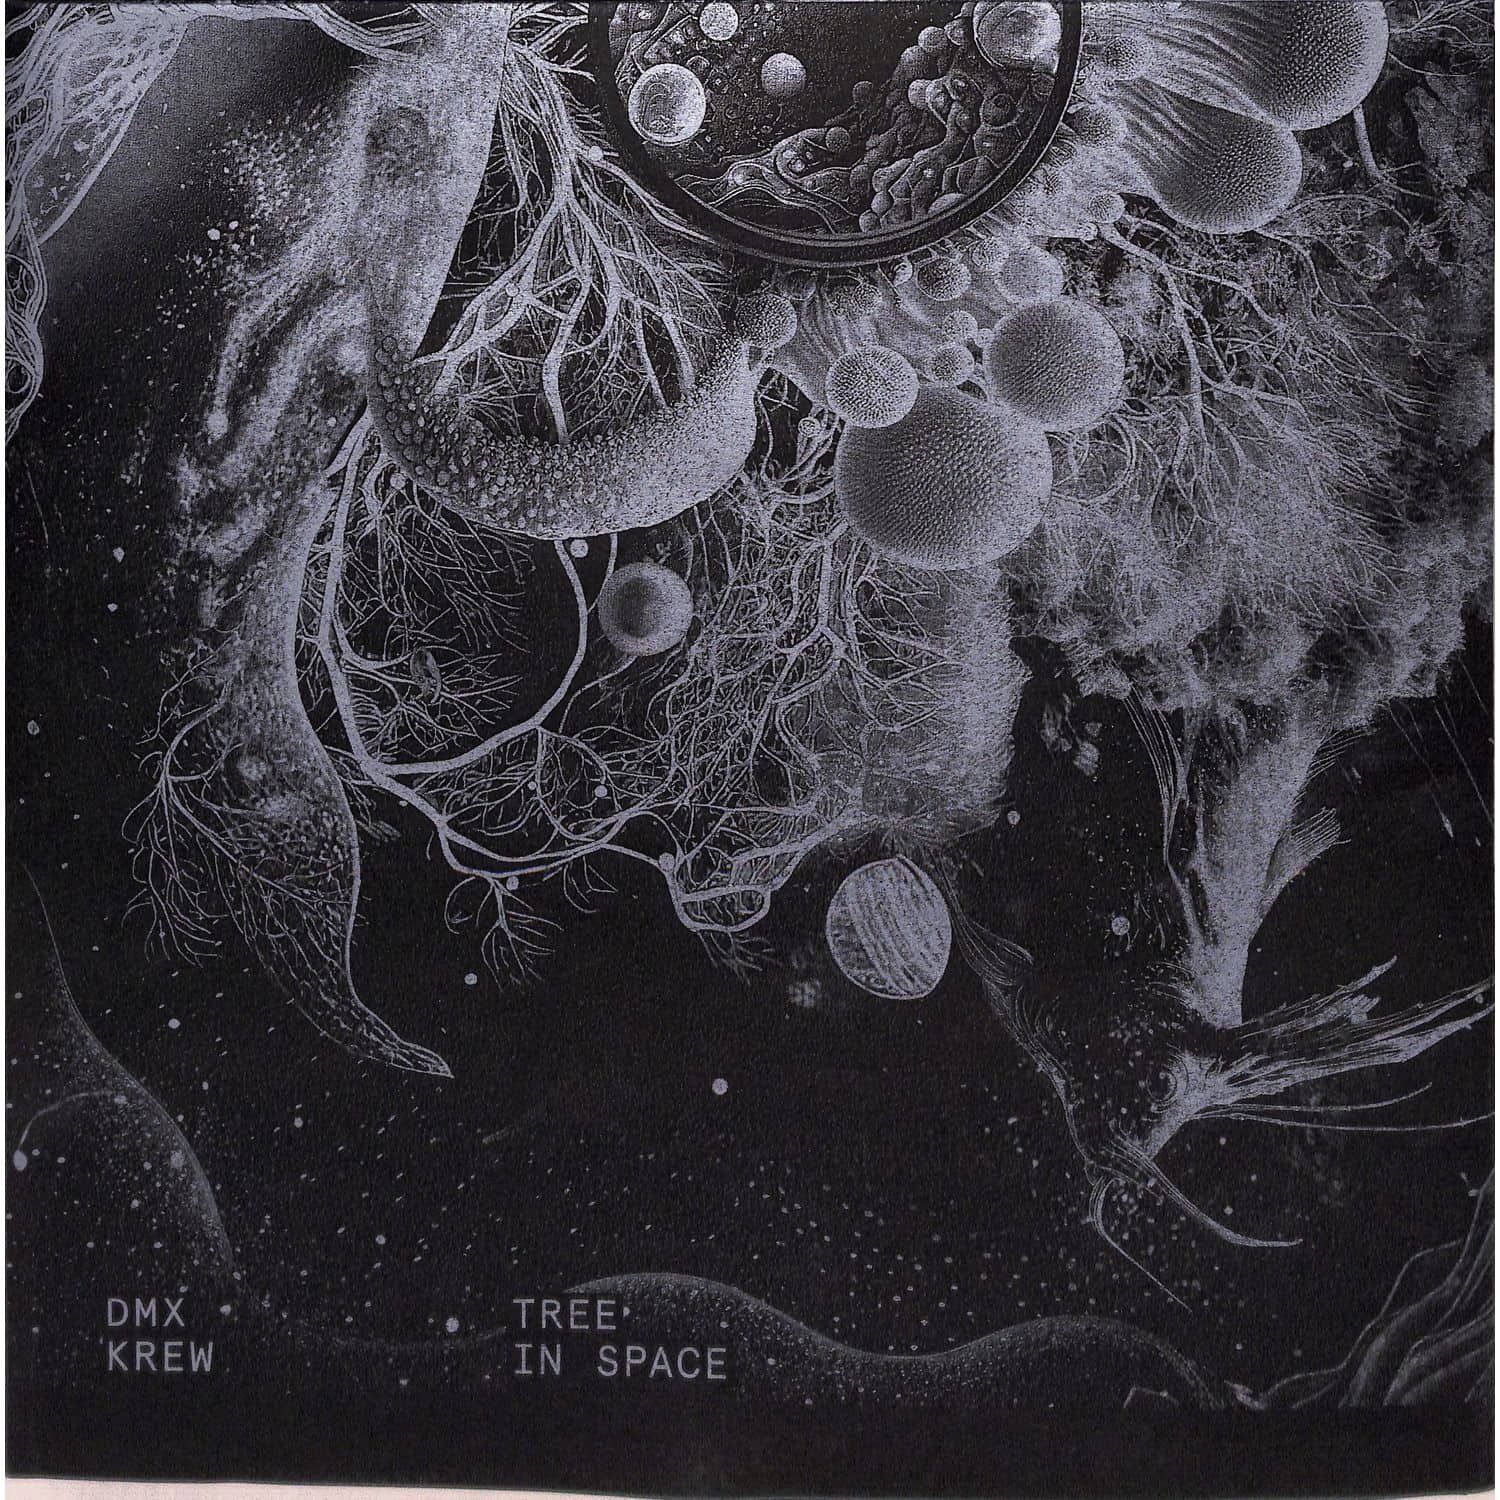 Dmx Krew - TREE IN SPACE 